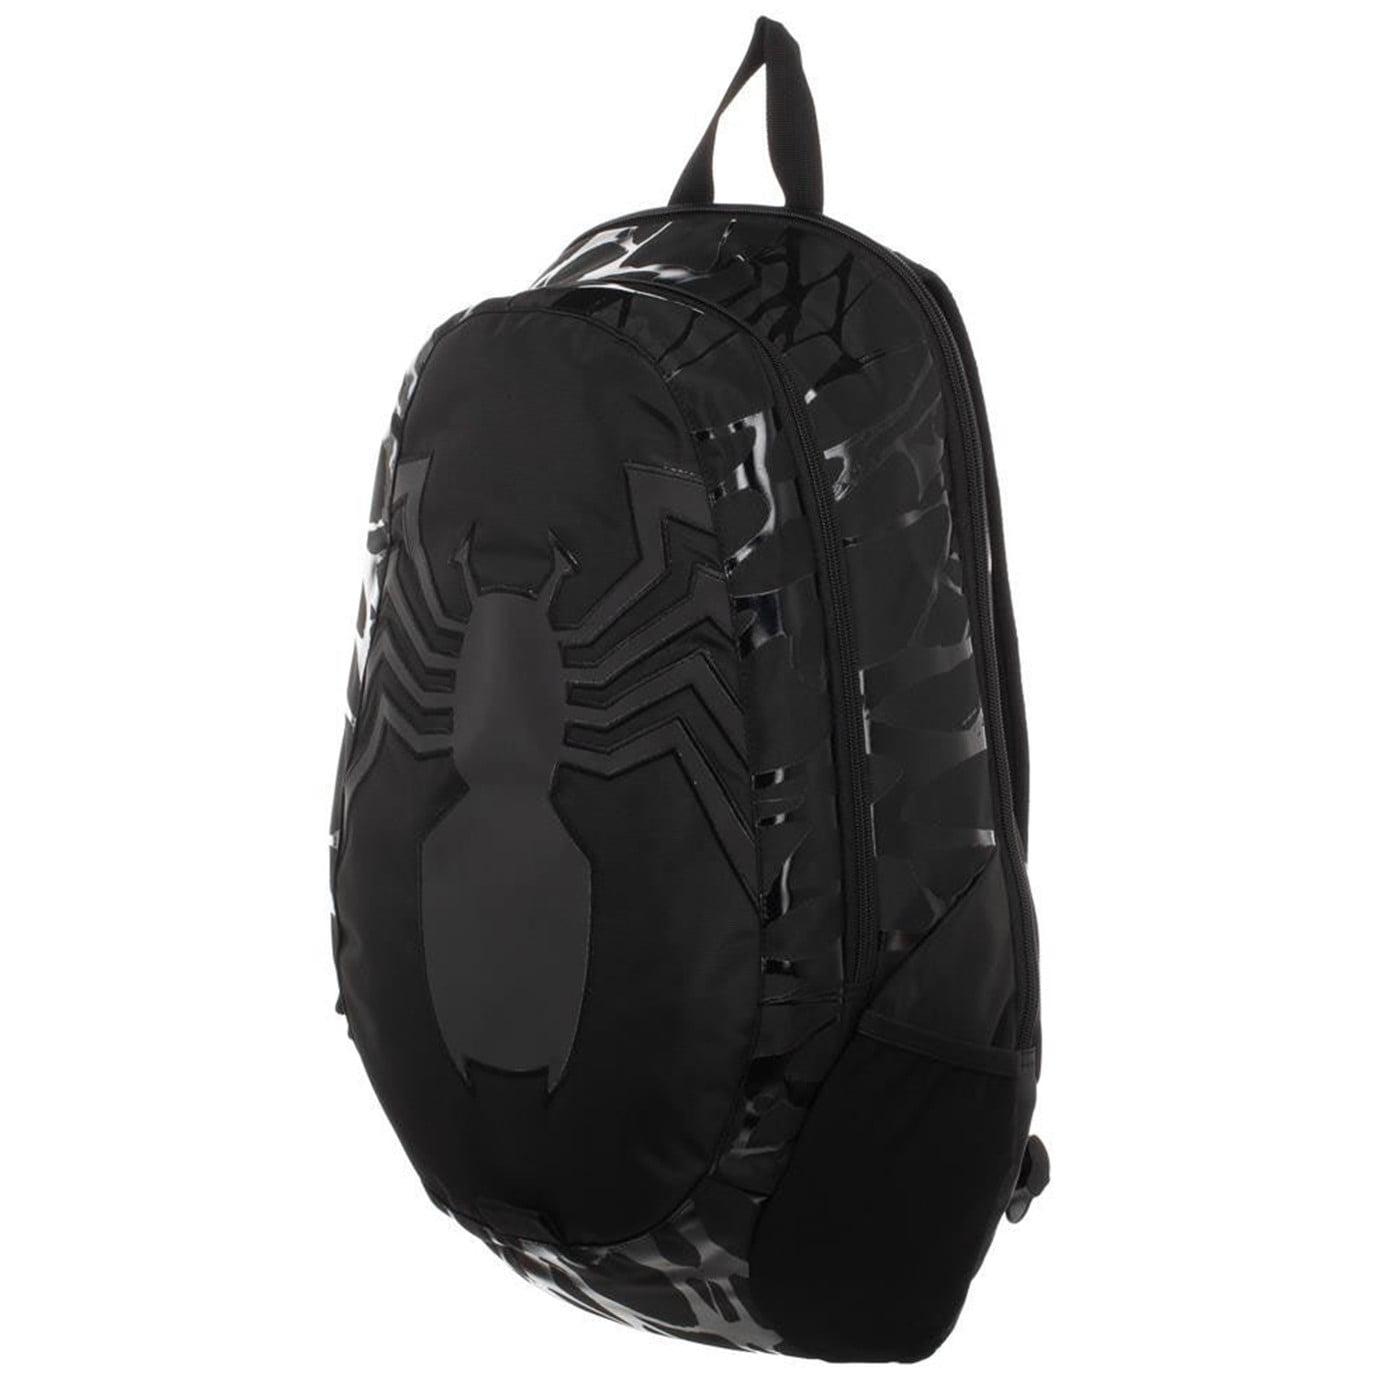 3D Venom Backpack School Bag Bookbag Travel Hiking Camping Daypack 